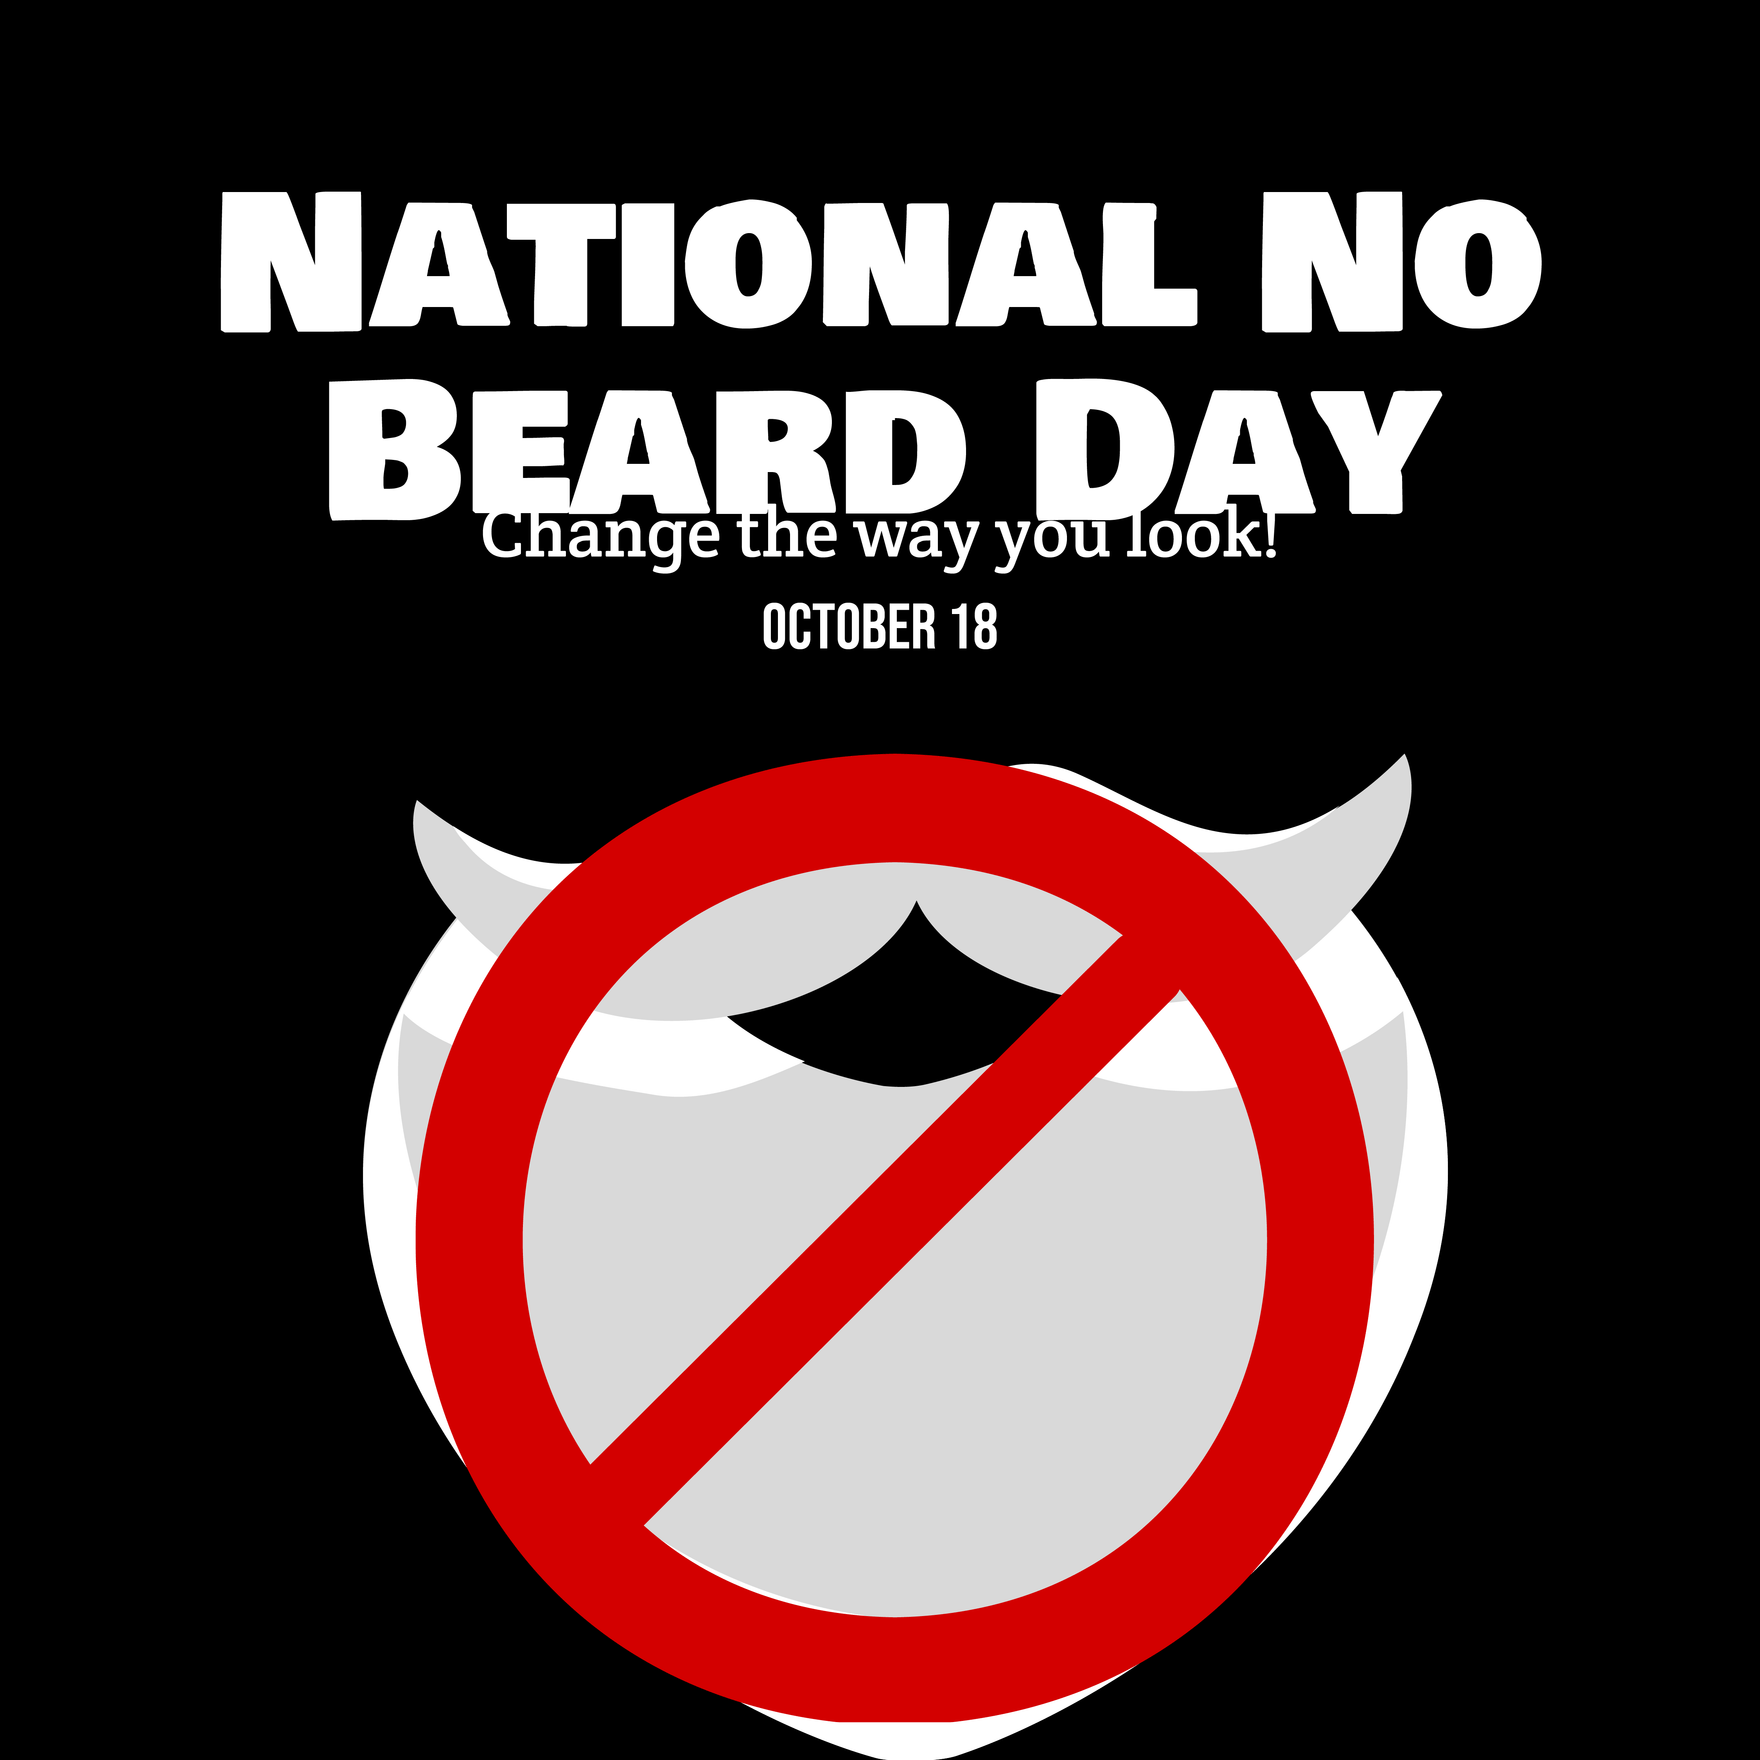 Free National No Beard Day Instagram Post in Illustrator, PSD, EPS, SVG, JPG, PNG